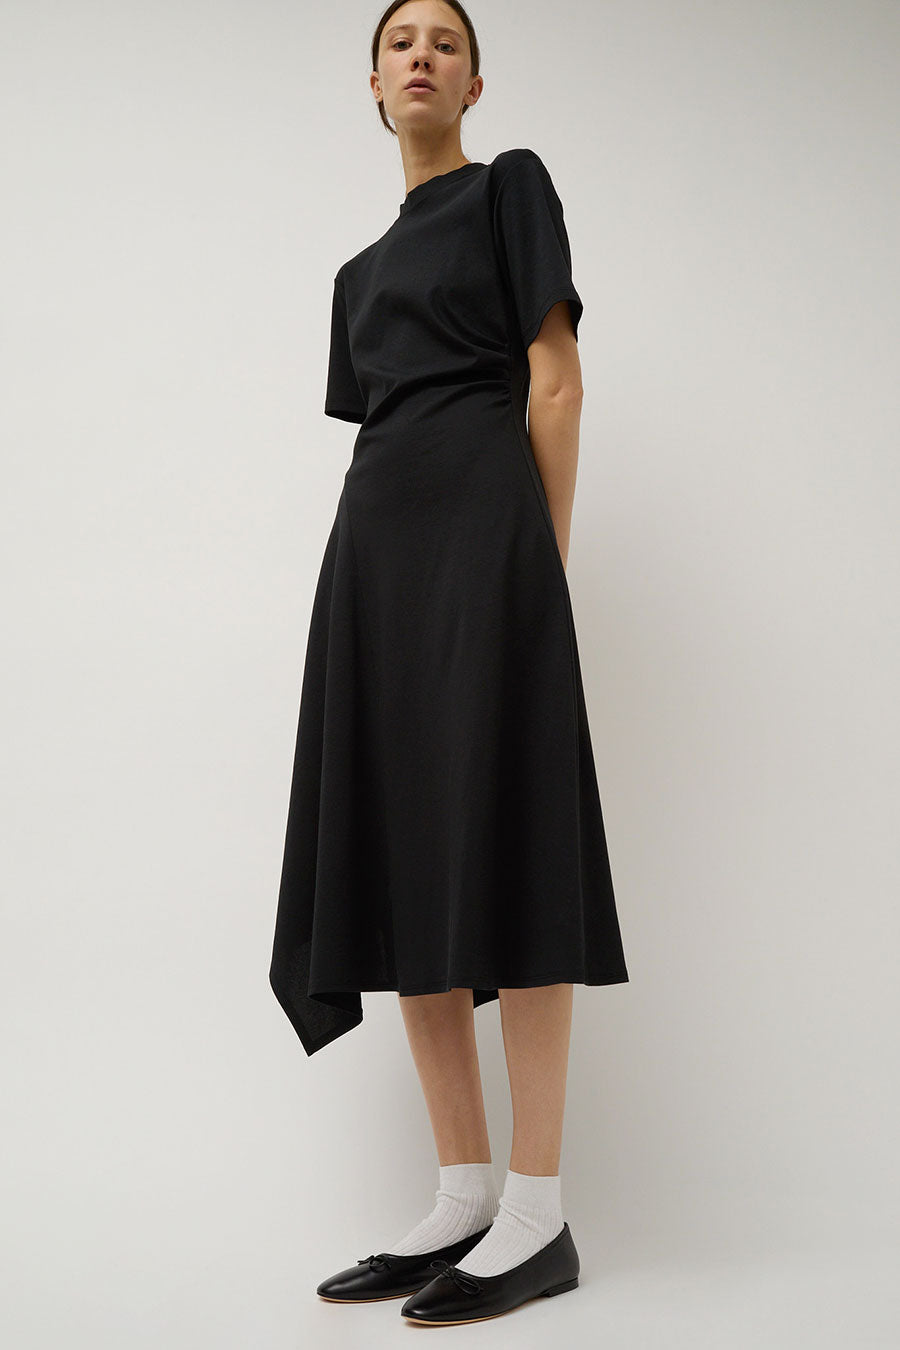 Black Bodycon Dress - OTS Mini Dress - Bodycon Mini Dress - Lulus